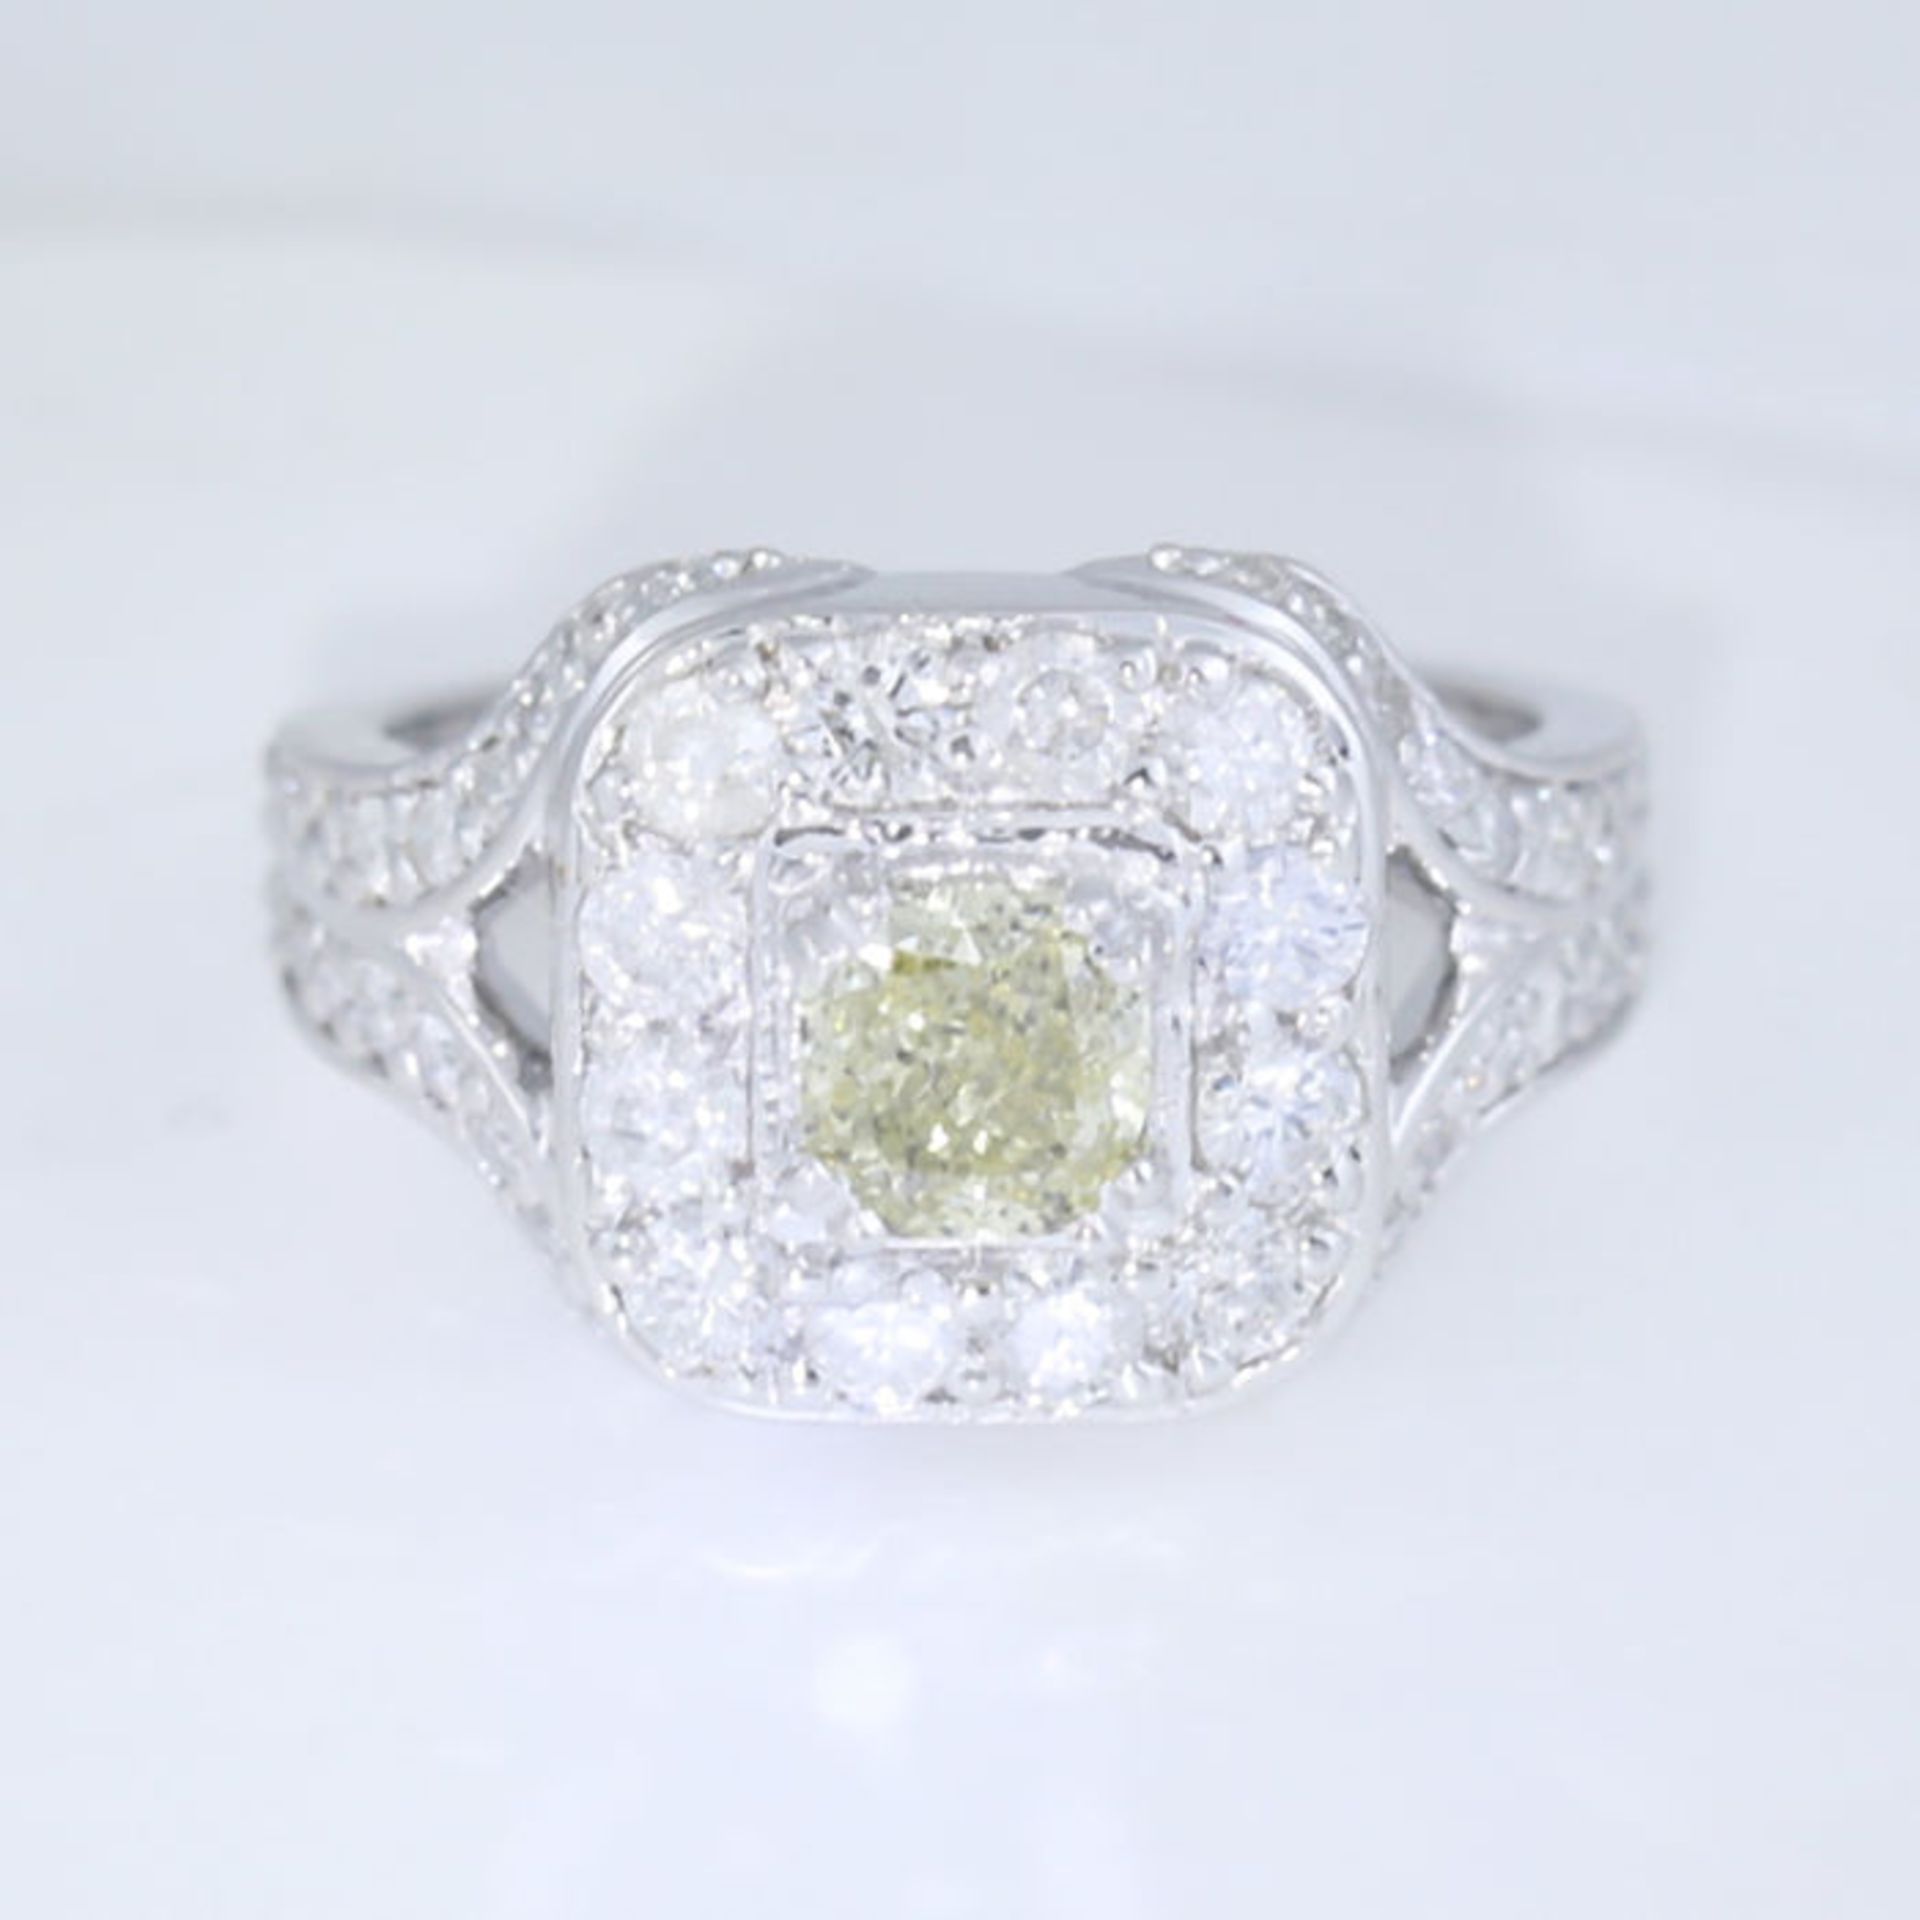 14 K / 585 White Gold Designer Solitaire Diamond (IGI Certified) Ring - Image 3 of 7